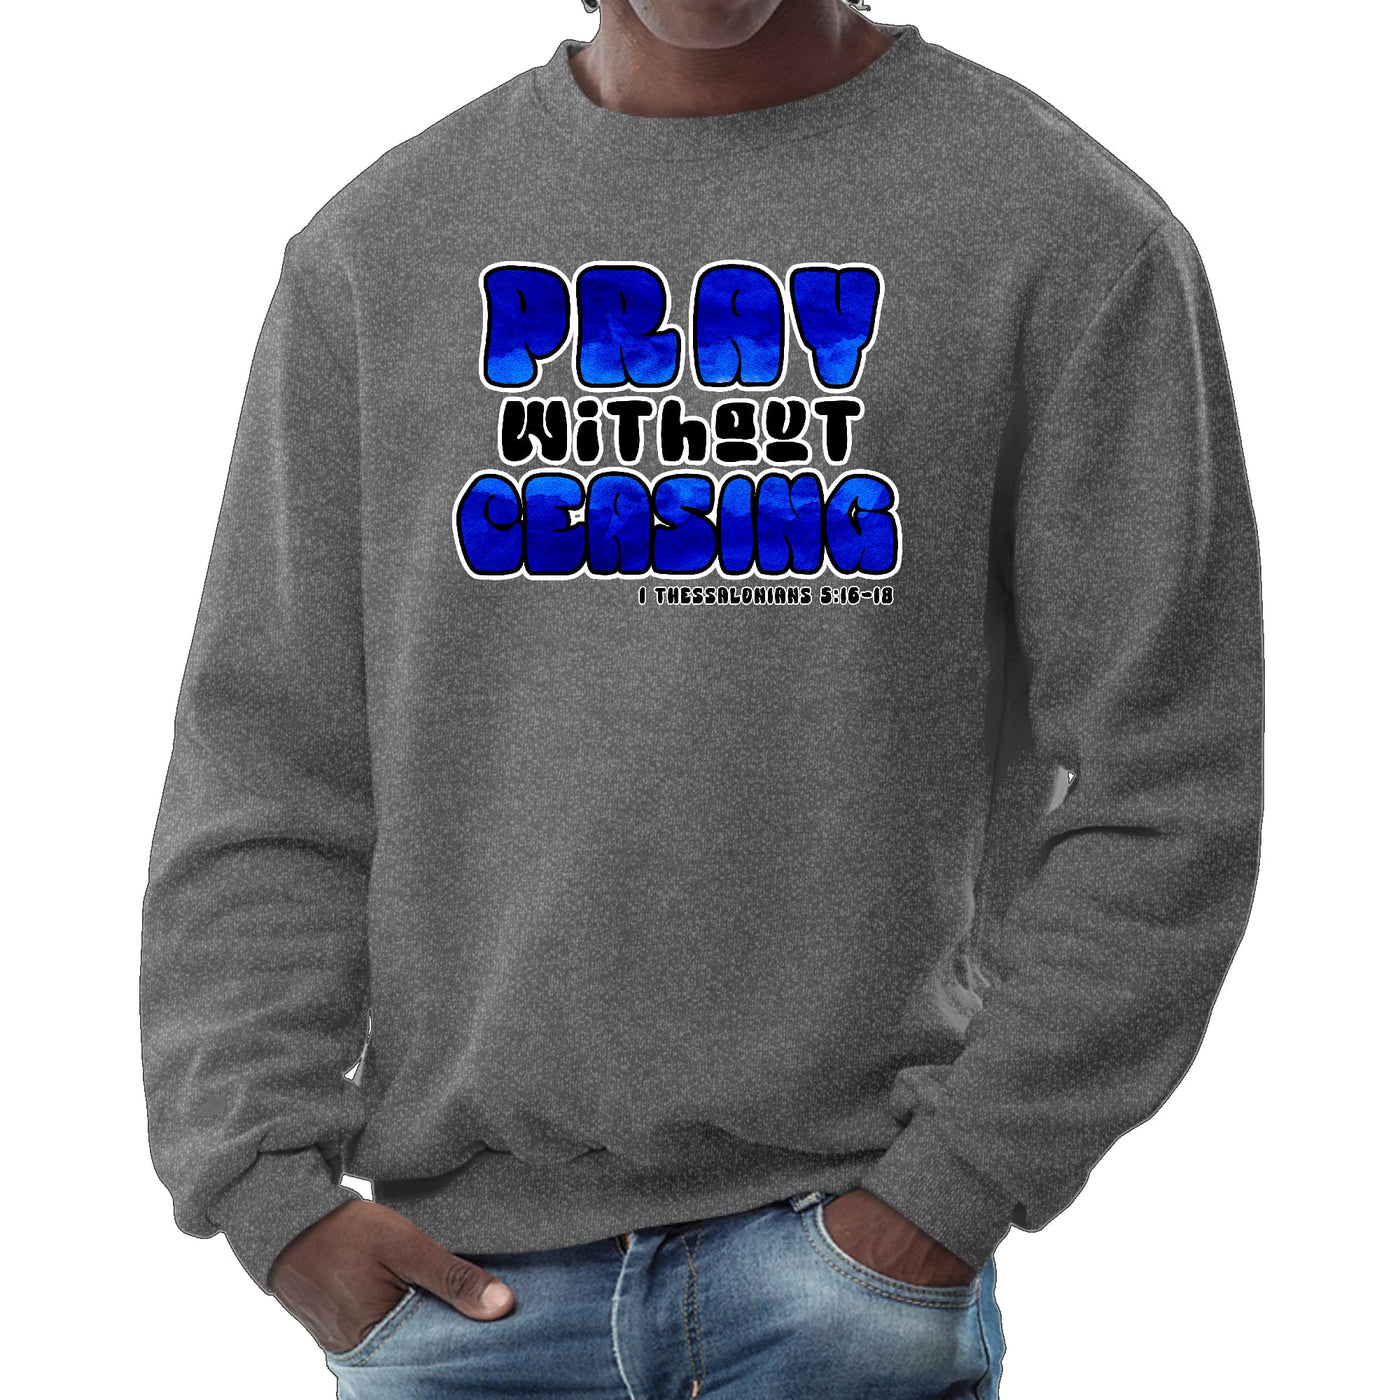 Mens Graphic Sweatshirt Pray Without Ceasing Inspirational - Mens | Sweatshirts